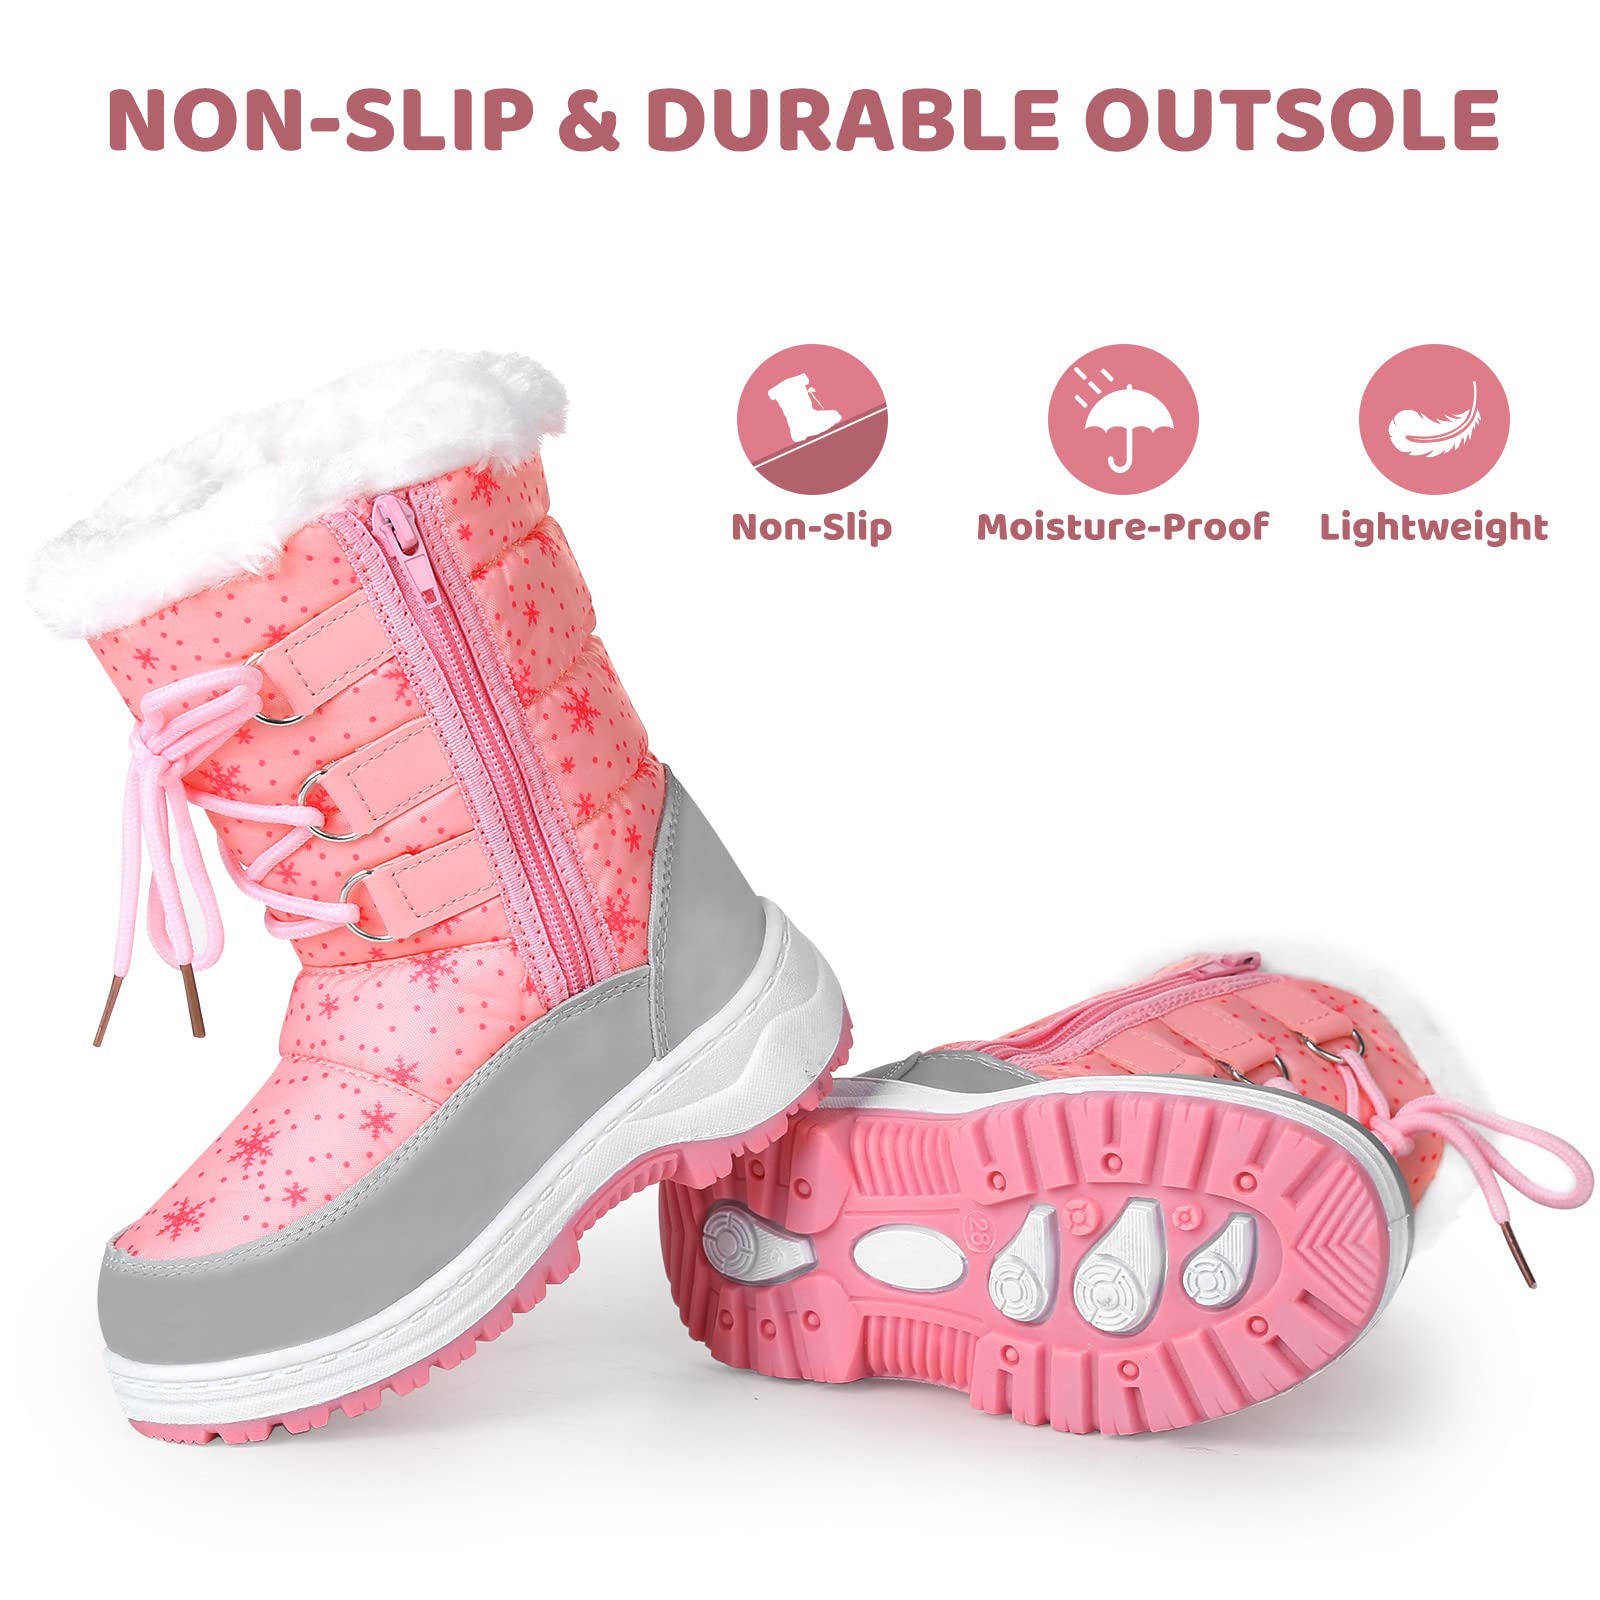 Apakowa Kids Girls Boys Insulated Fur Winter Warm Snow Boots (Toddler/Little Kid)